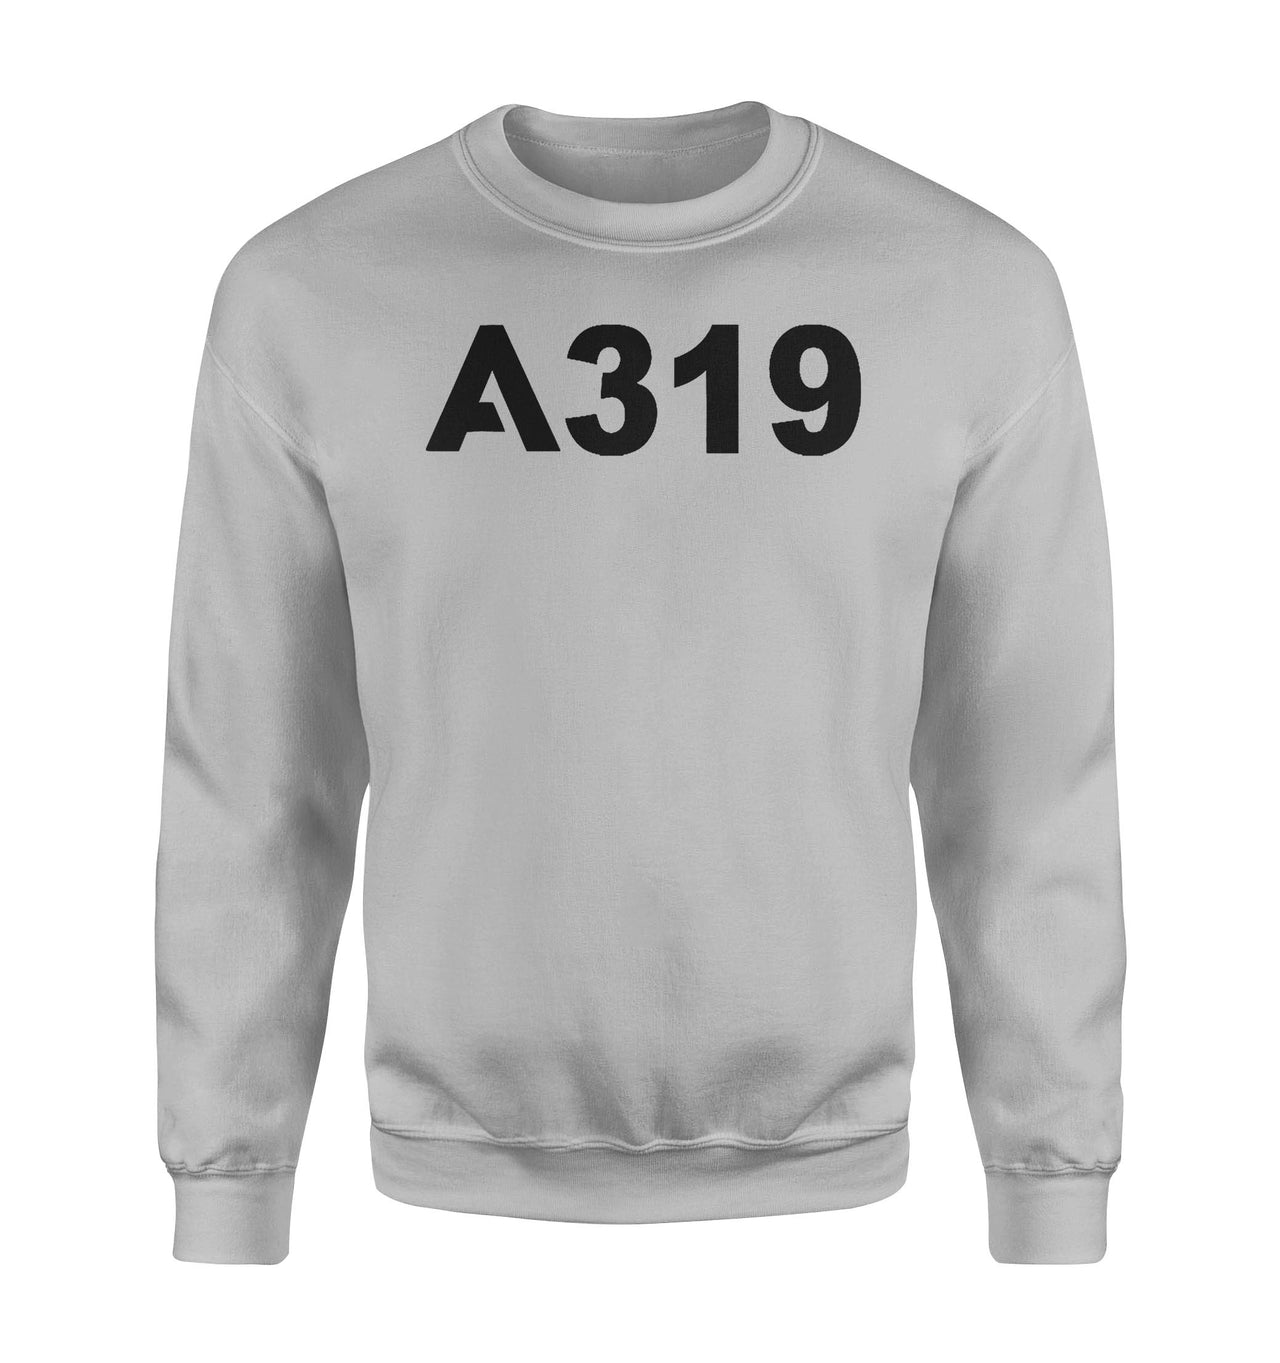 A319 Flat Text Designed Sweatshirts